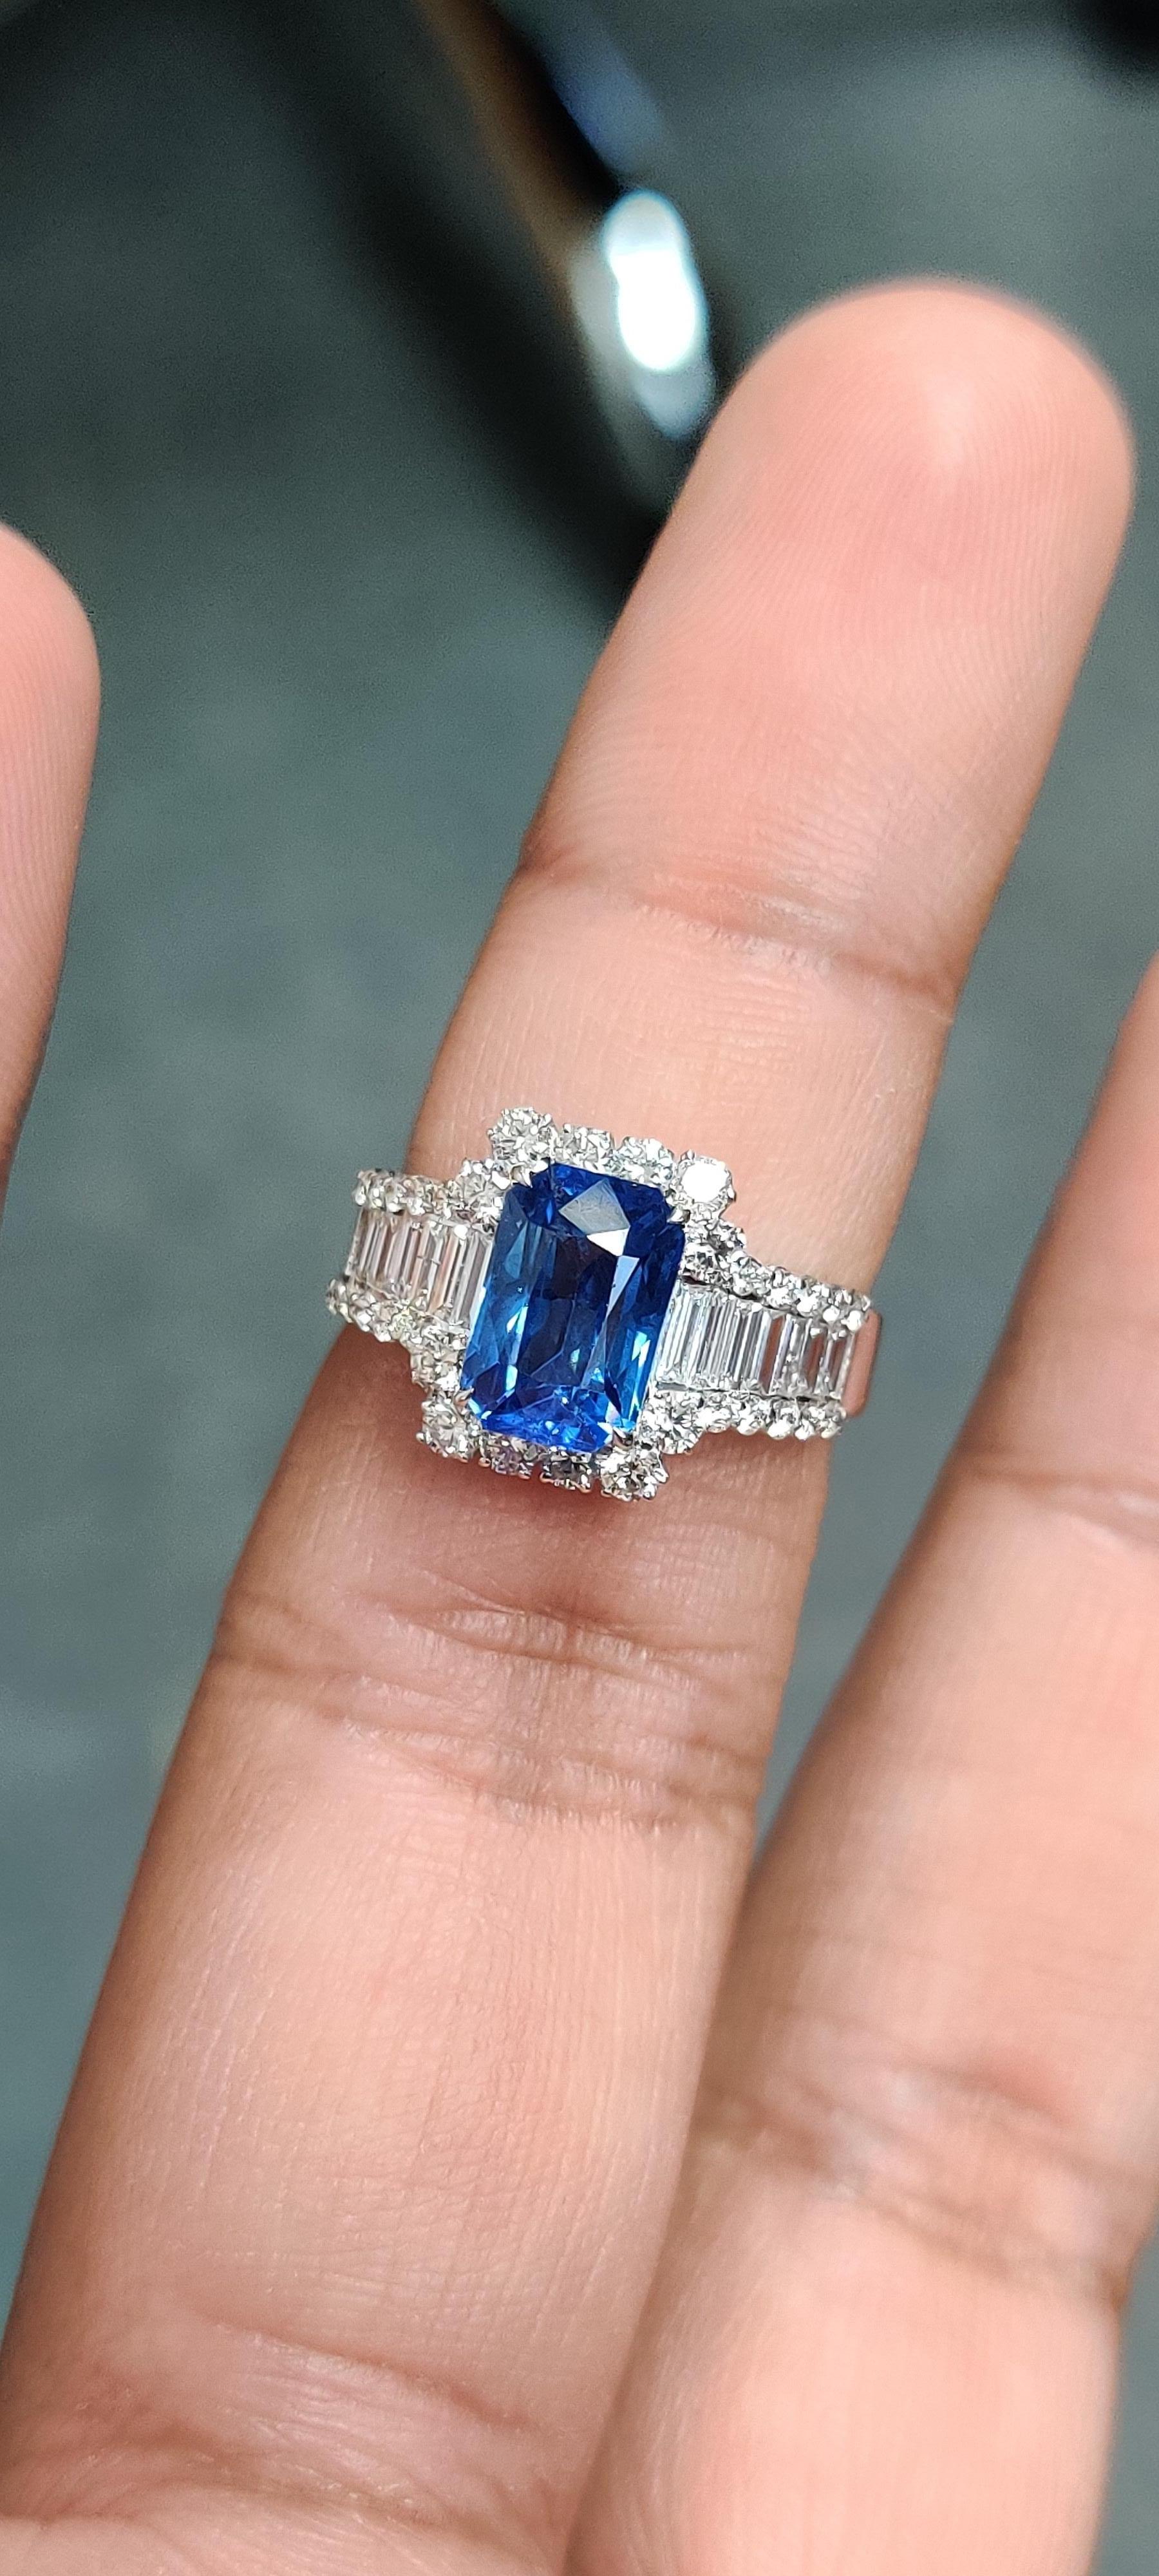 2.87 Carat Ceylon Blue Sapphire Diamond Cocktail Ring For Sale 1